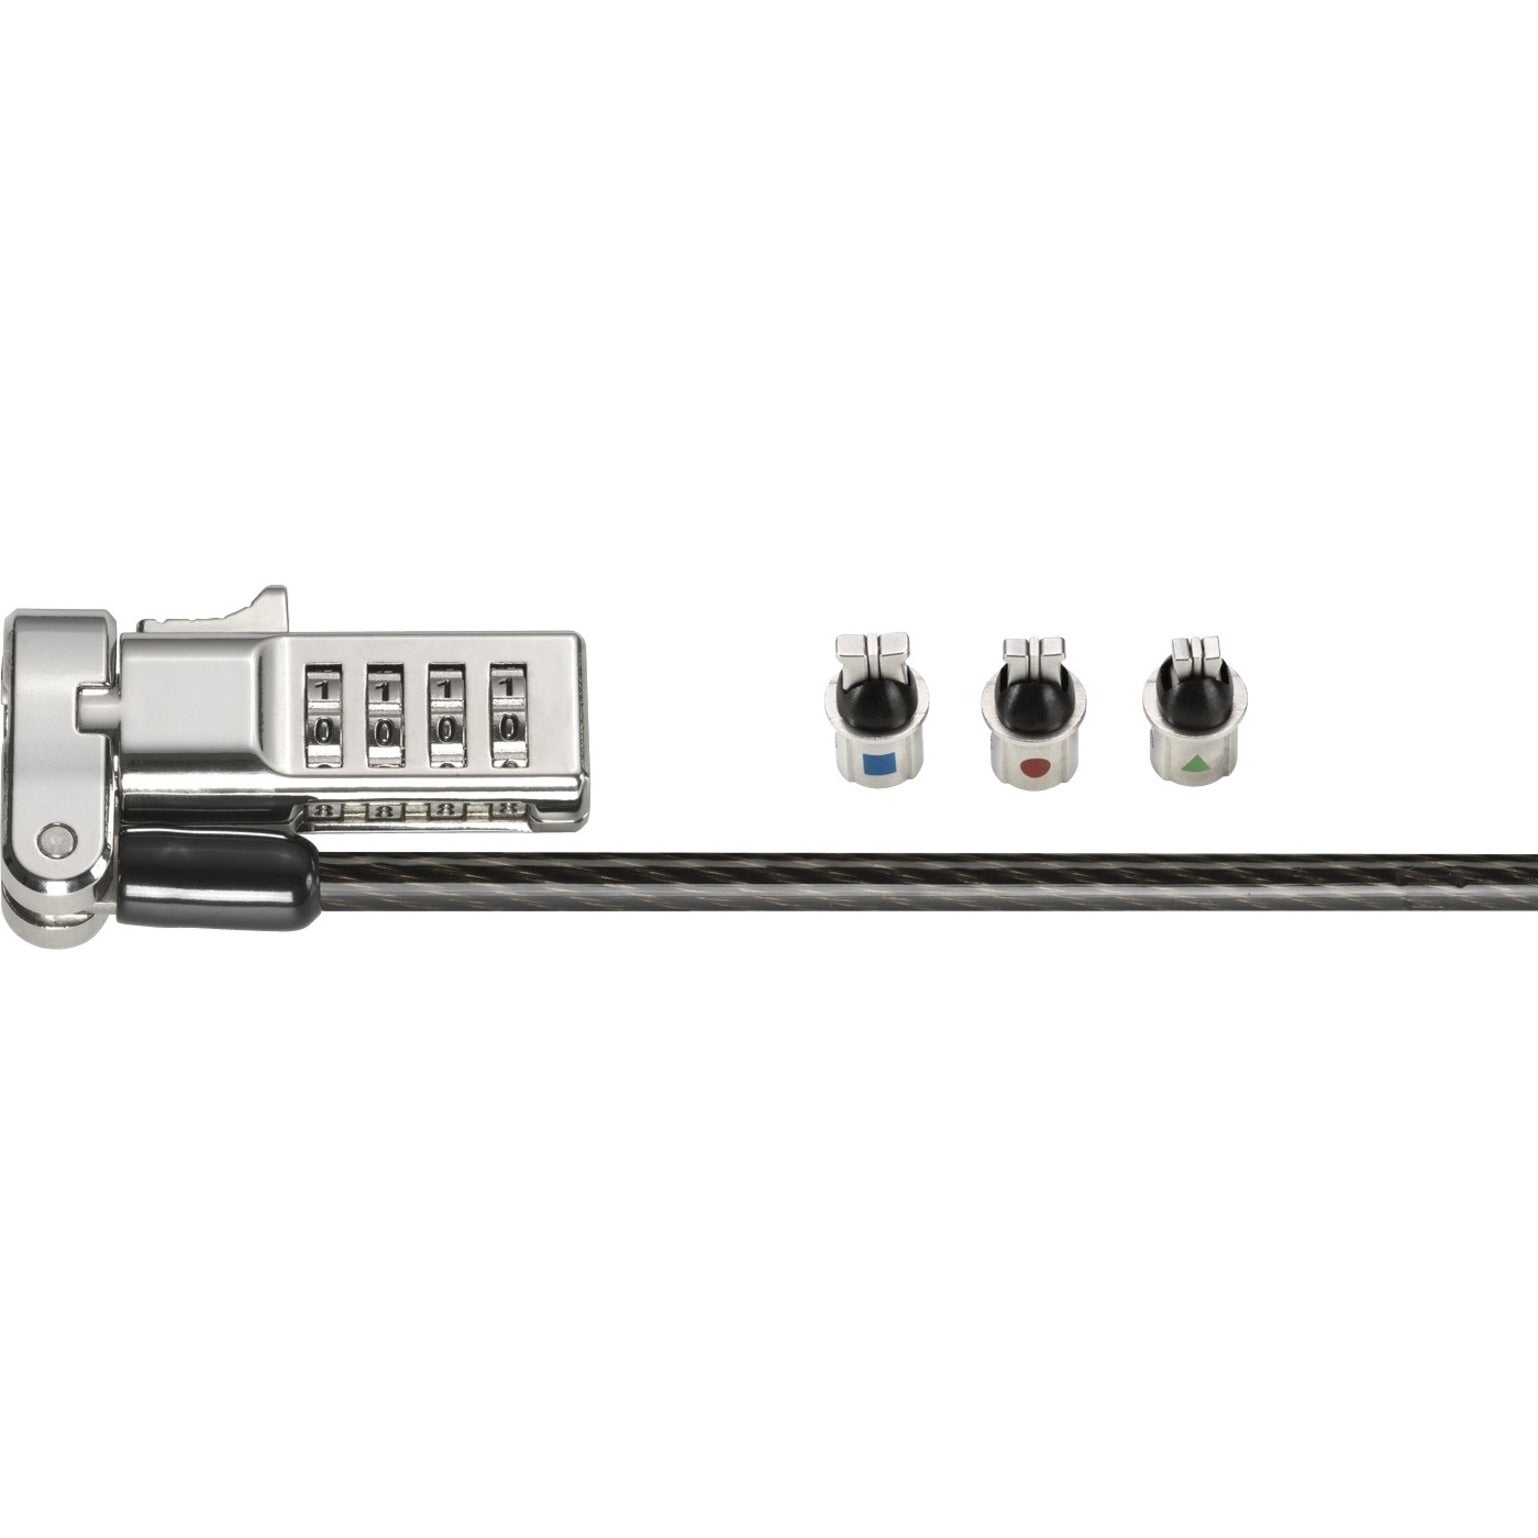 Kensington K62317WW 3-in-1 Combination Serialized Laptop Lock, 6 ft Cable Length, Preset Combination Lock